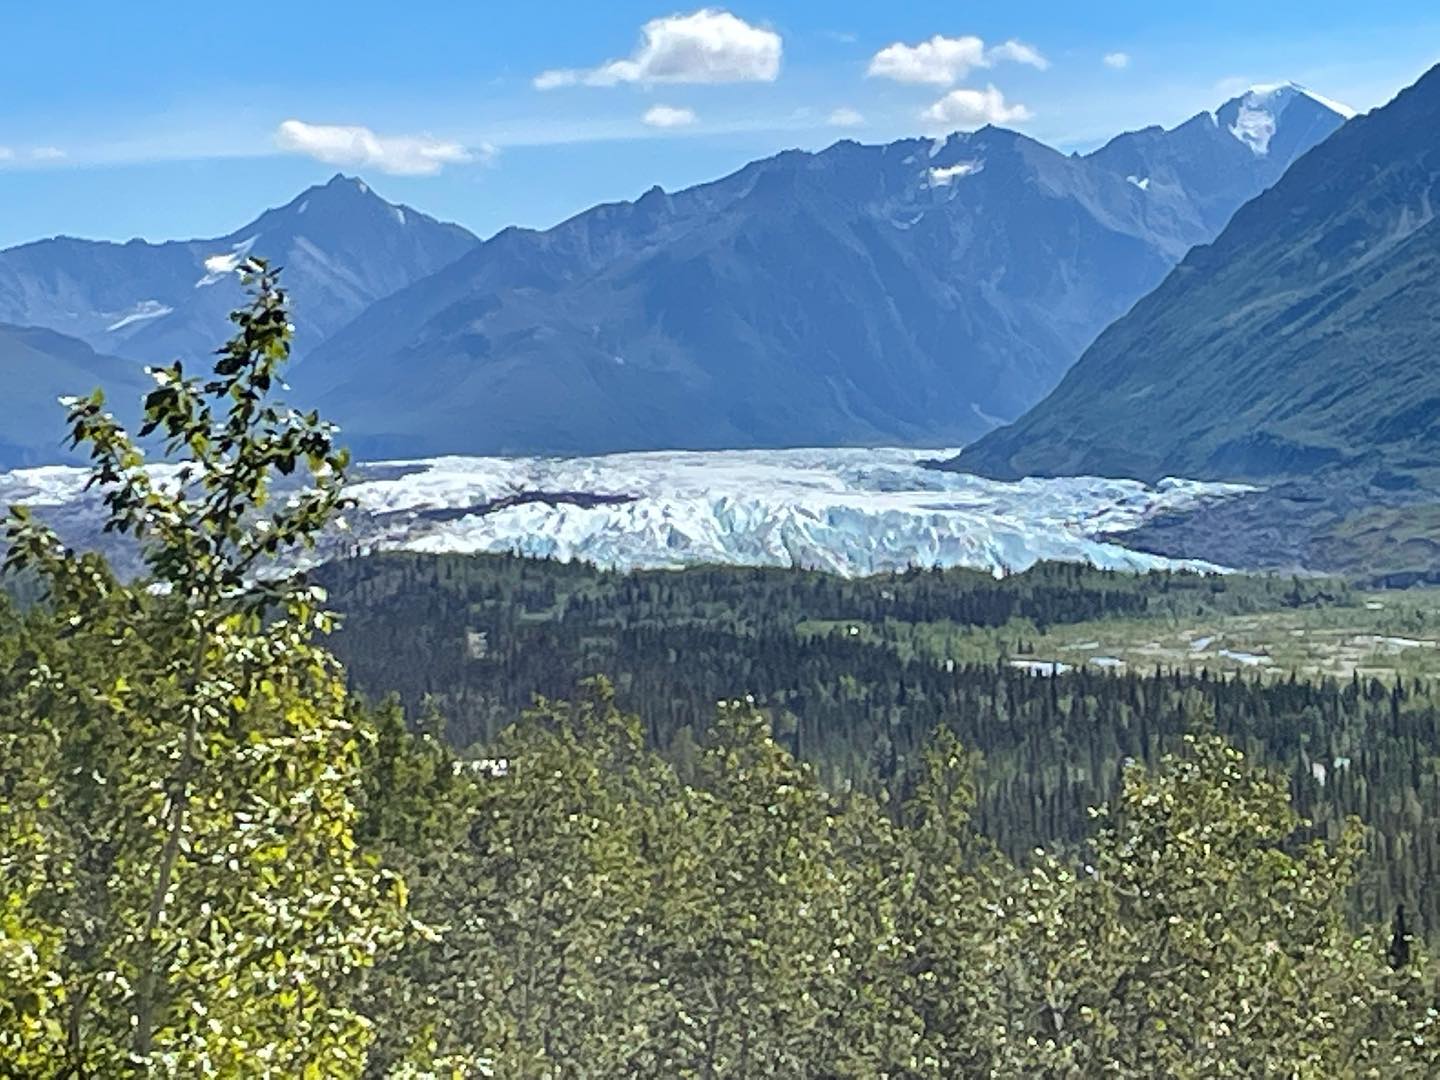 Matanuska glacier at viewpoint. Isn’t it beautiful? #alaska #alaskaglaciers #glacier #nature #tours #vacation #brandusa #followme #amazing #beautiful #touroperator #1dmcworld #matanuska #picoftheday #instapic